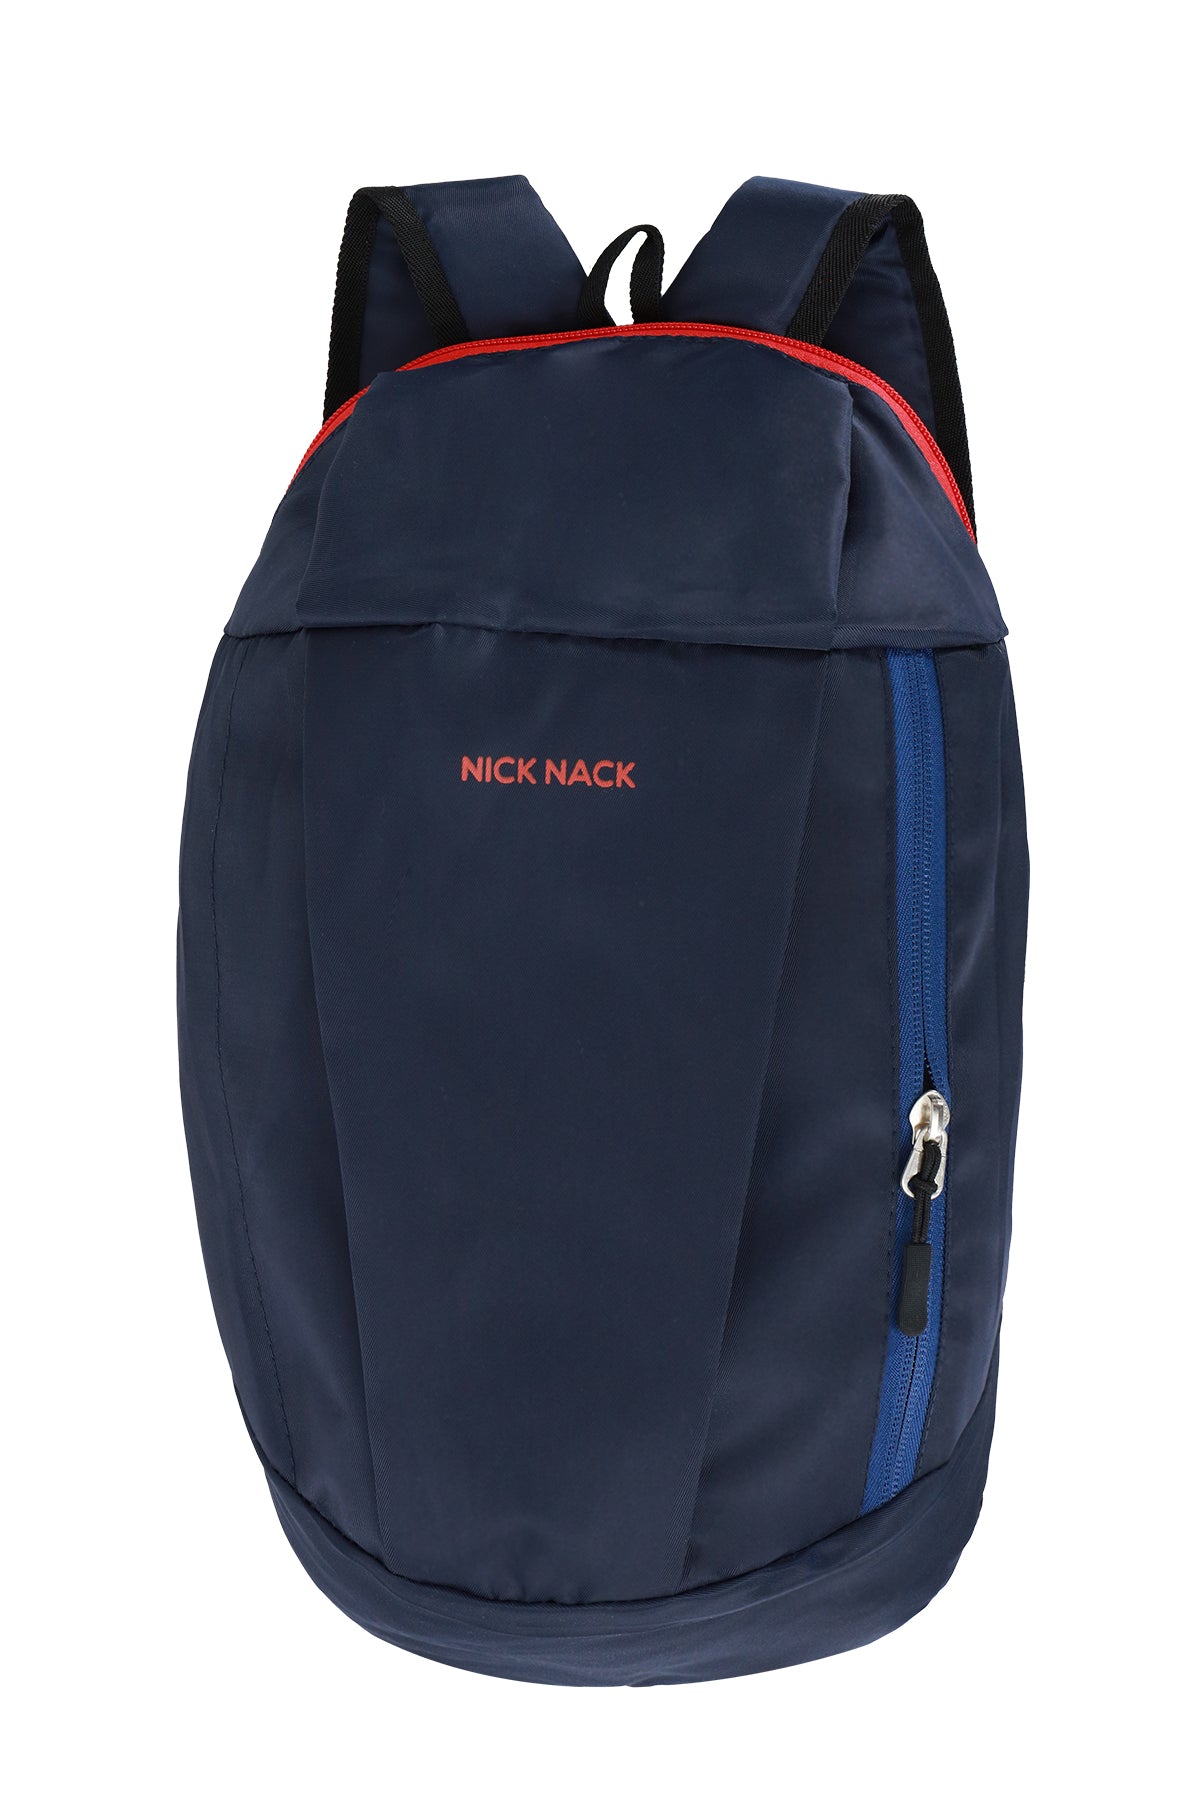 Nick Nack Unisex Hiking Backpack (7875366813920)